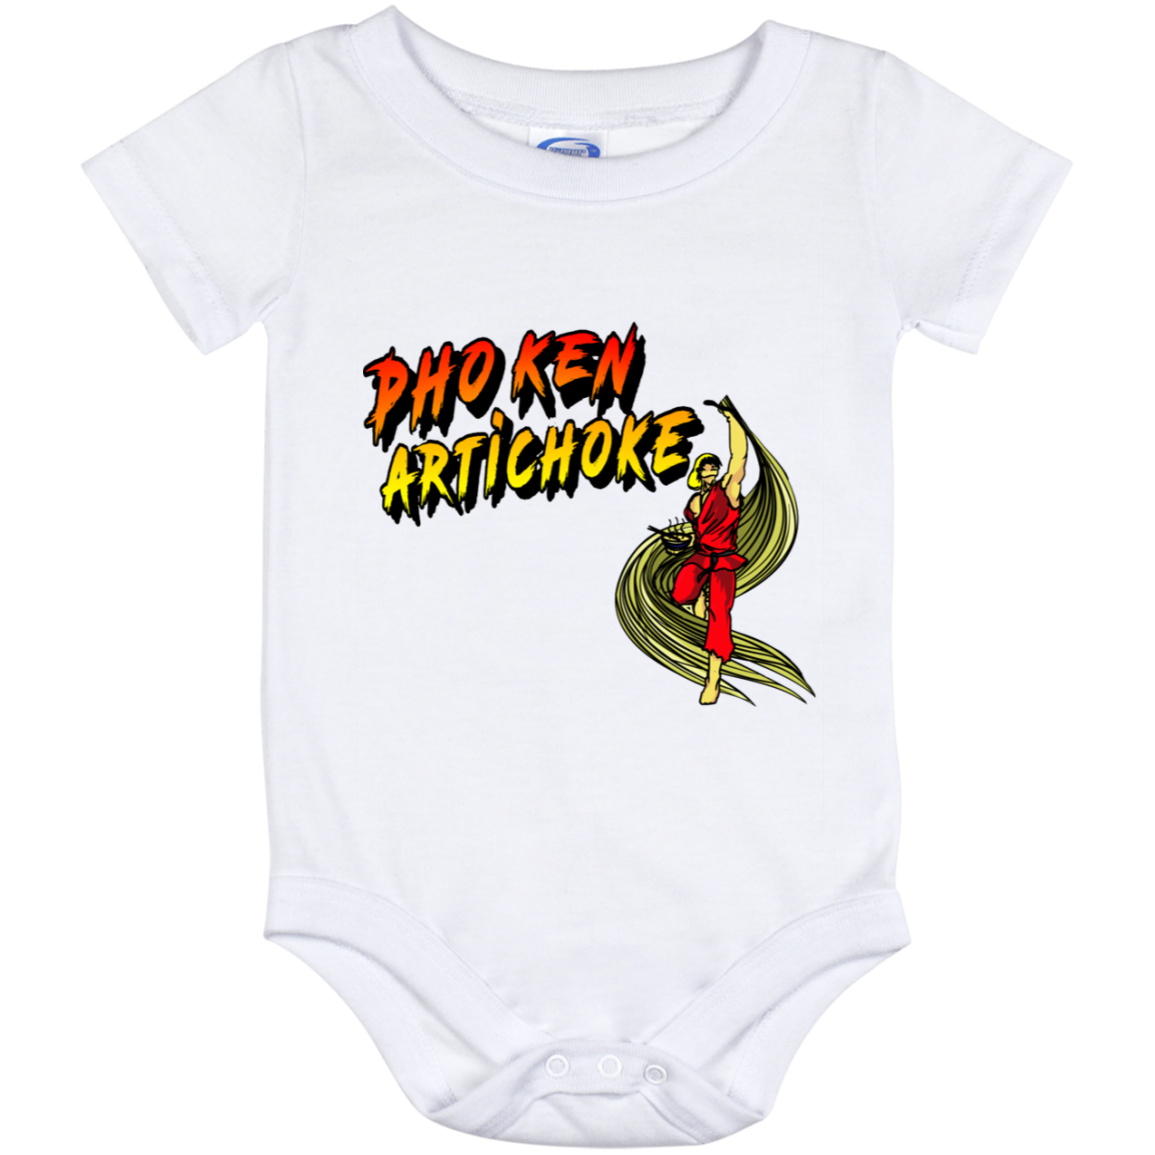 ArtichokeUSA Custom Design. Pho Ken Artichoke. Street Fighter Parody. Gaming. Baby Onesie 12 Month